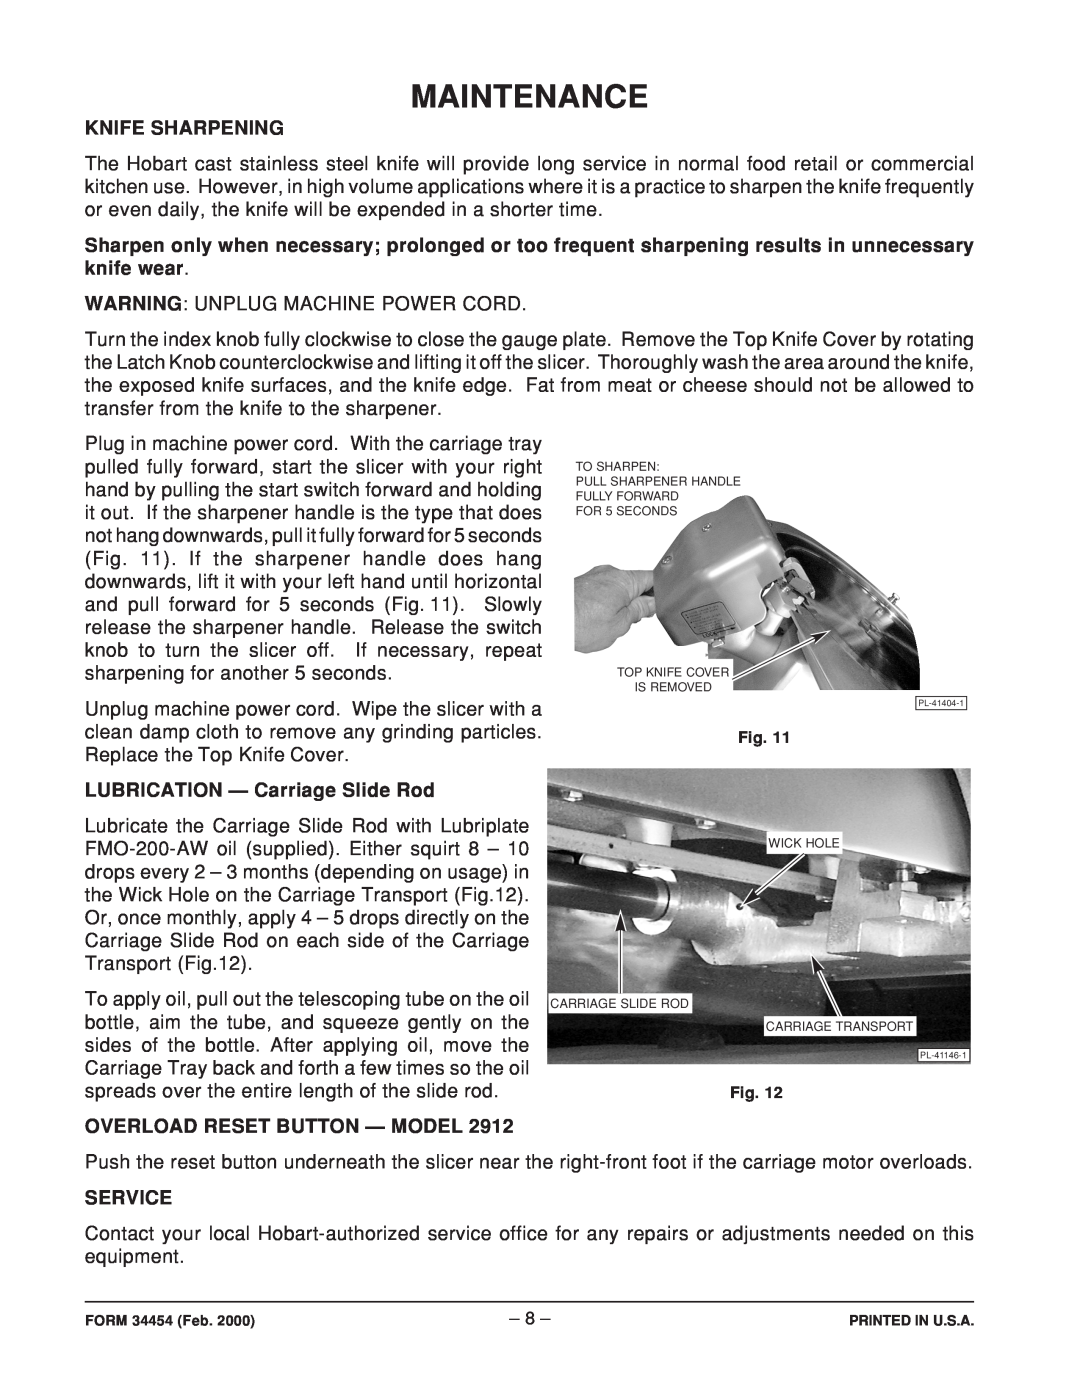 Hobart 2912 ML-104963 manual Maintenance, Knife Sharpening, LUBRICATION - Carriage Slide Rod, Overload Reset Button - Model 